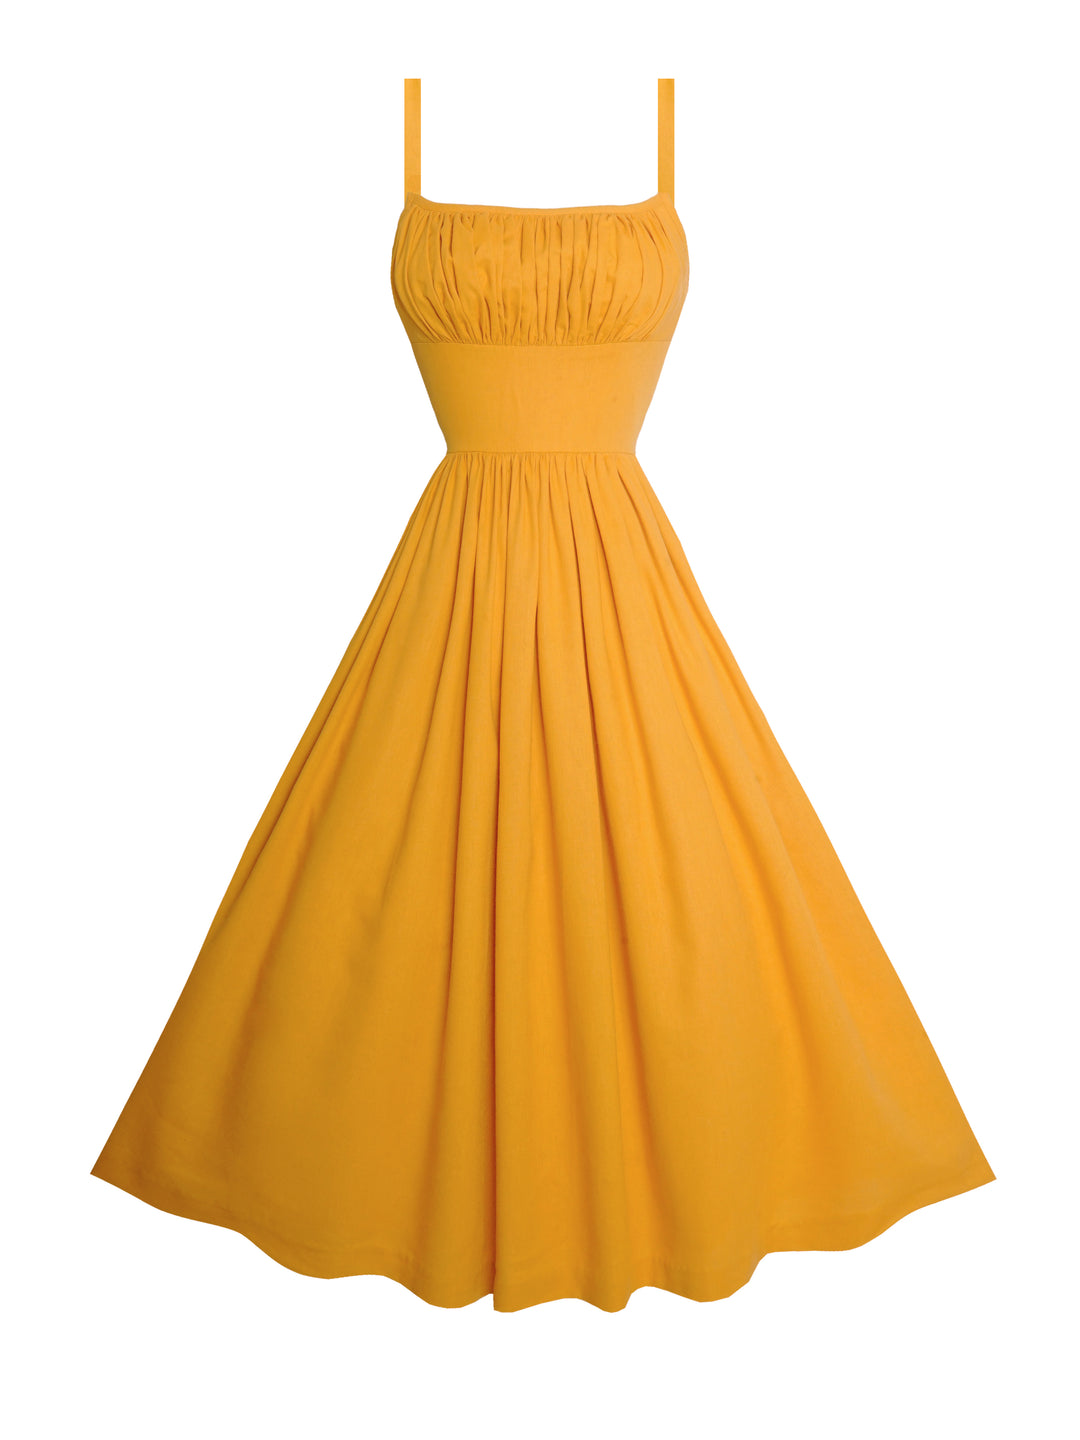 Choose a fabric: Grace Dress